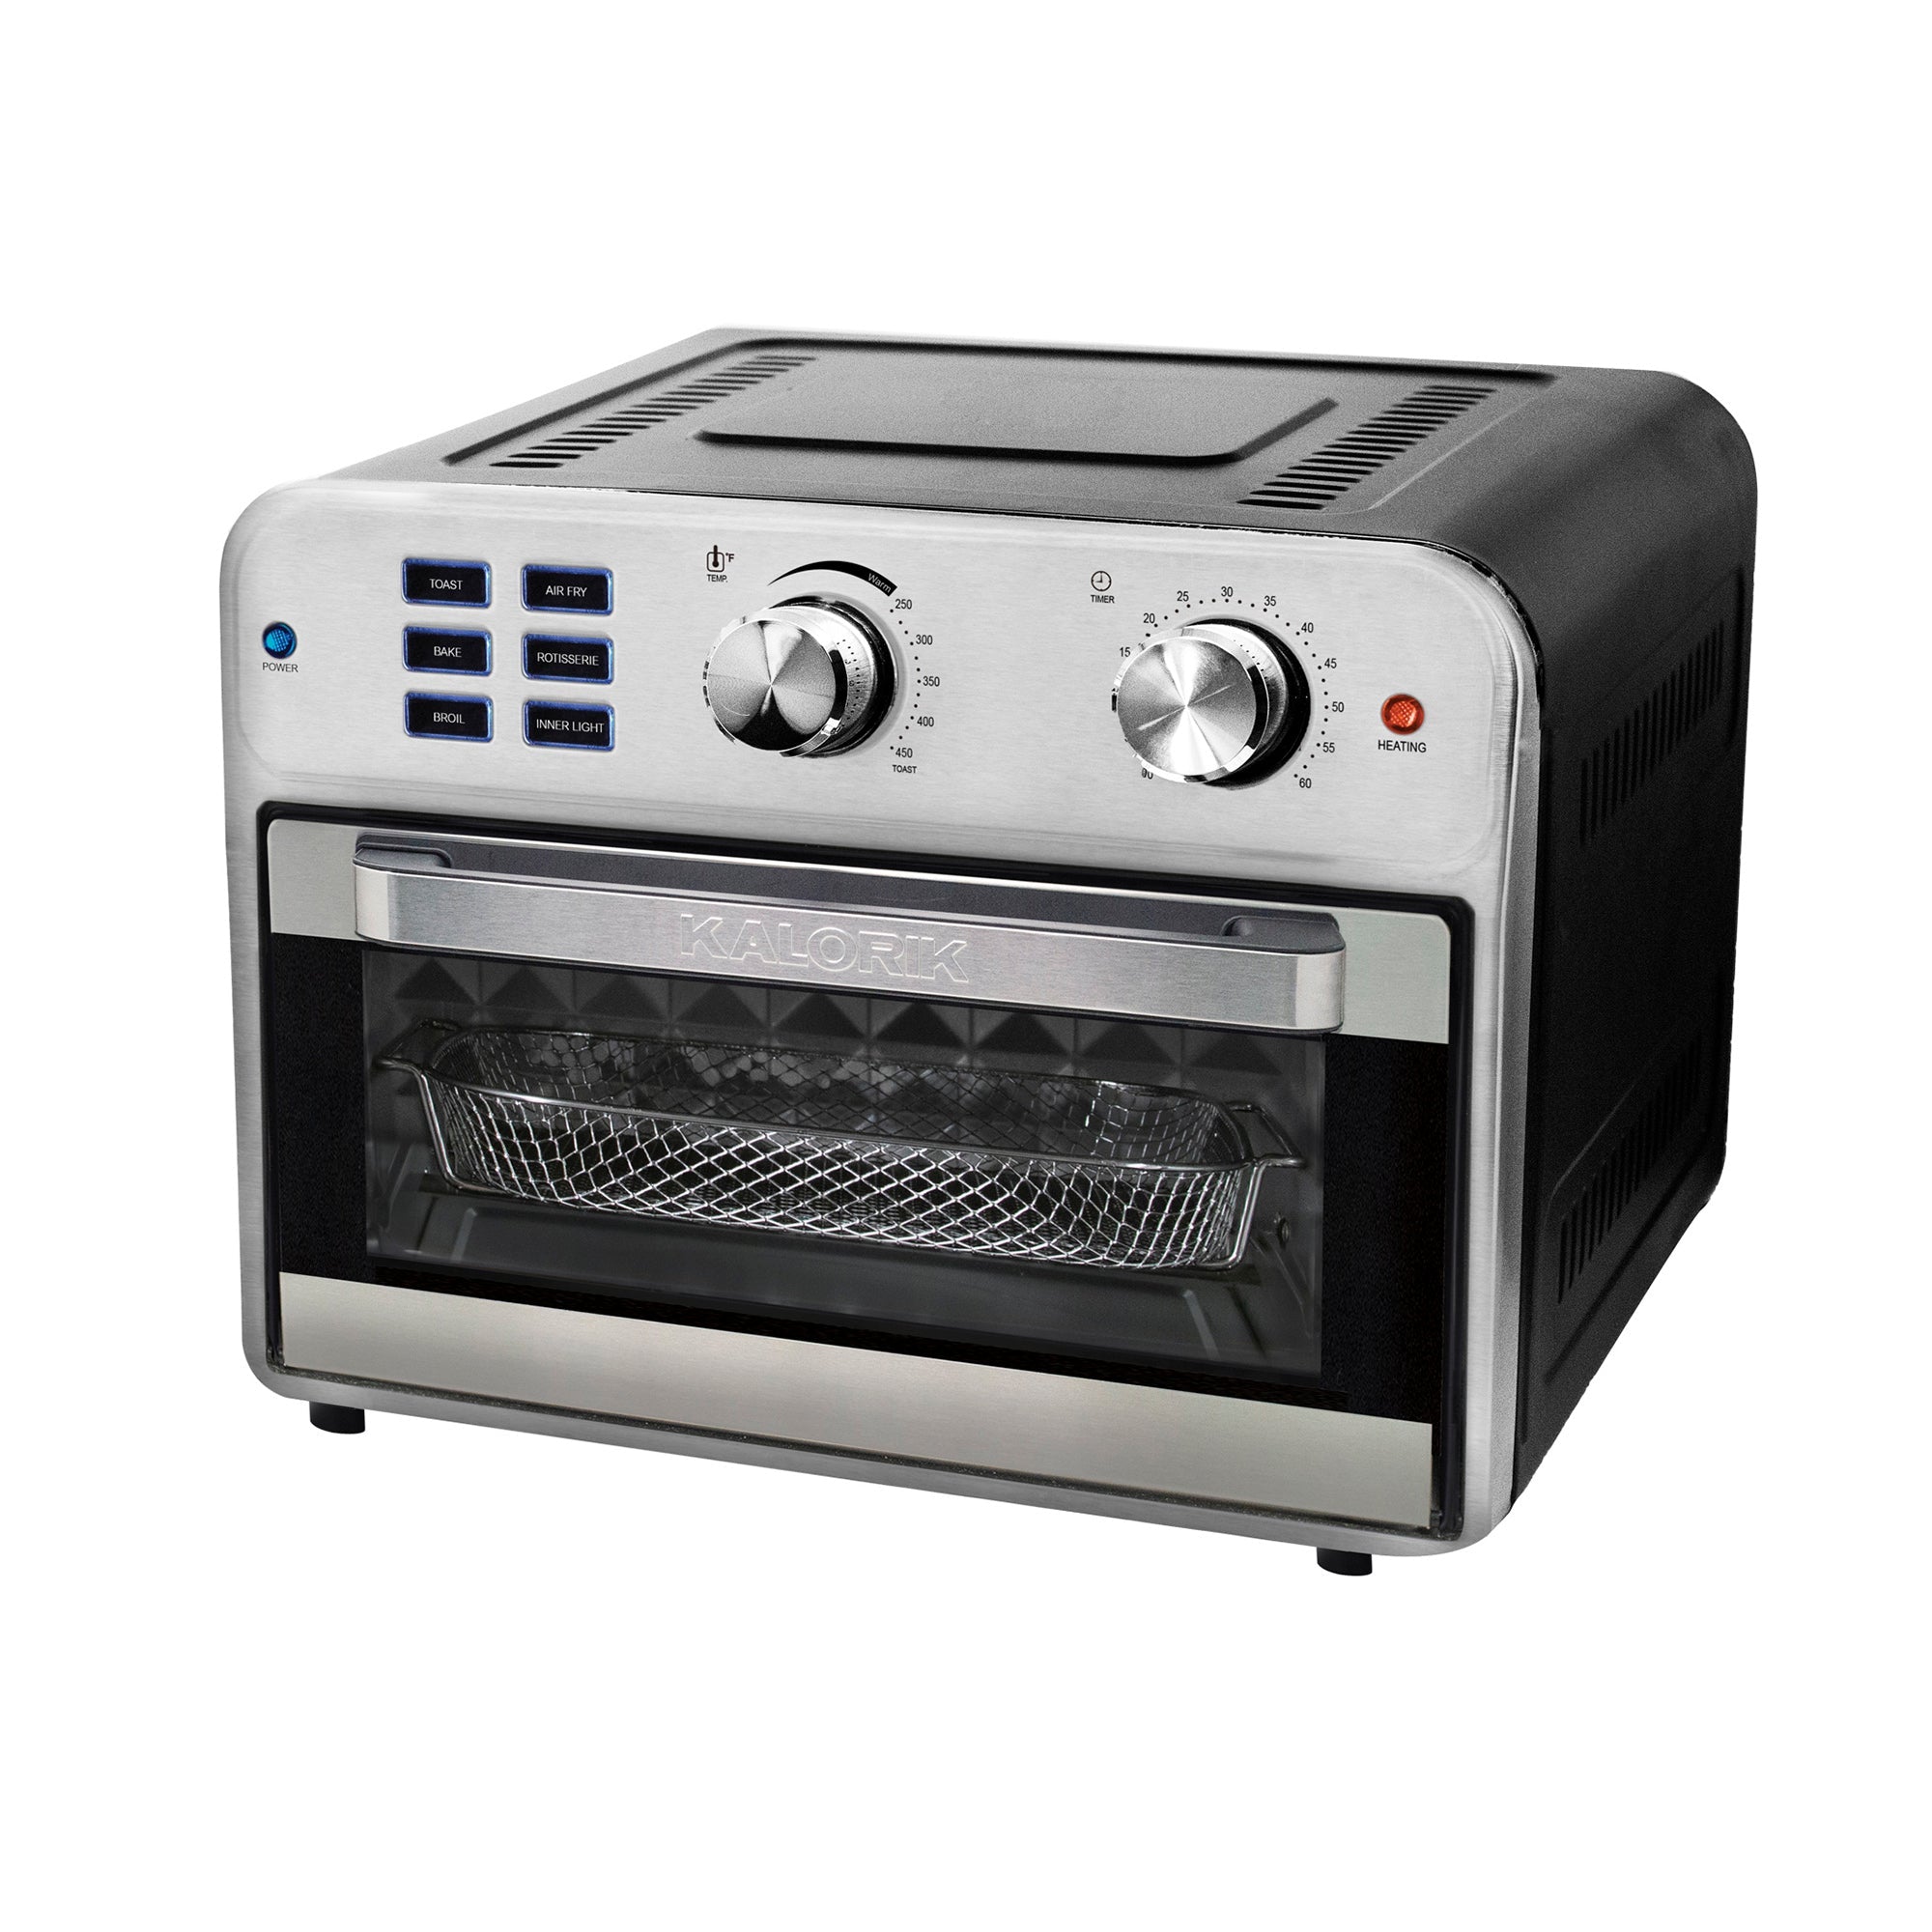 Kalorik 22 Quart Digital Air Fryer Toaster Oven